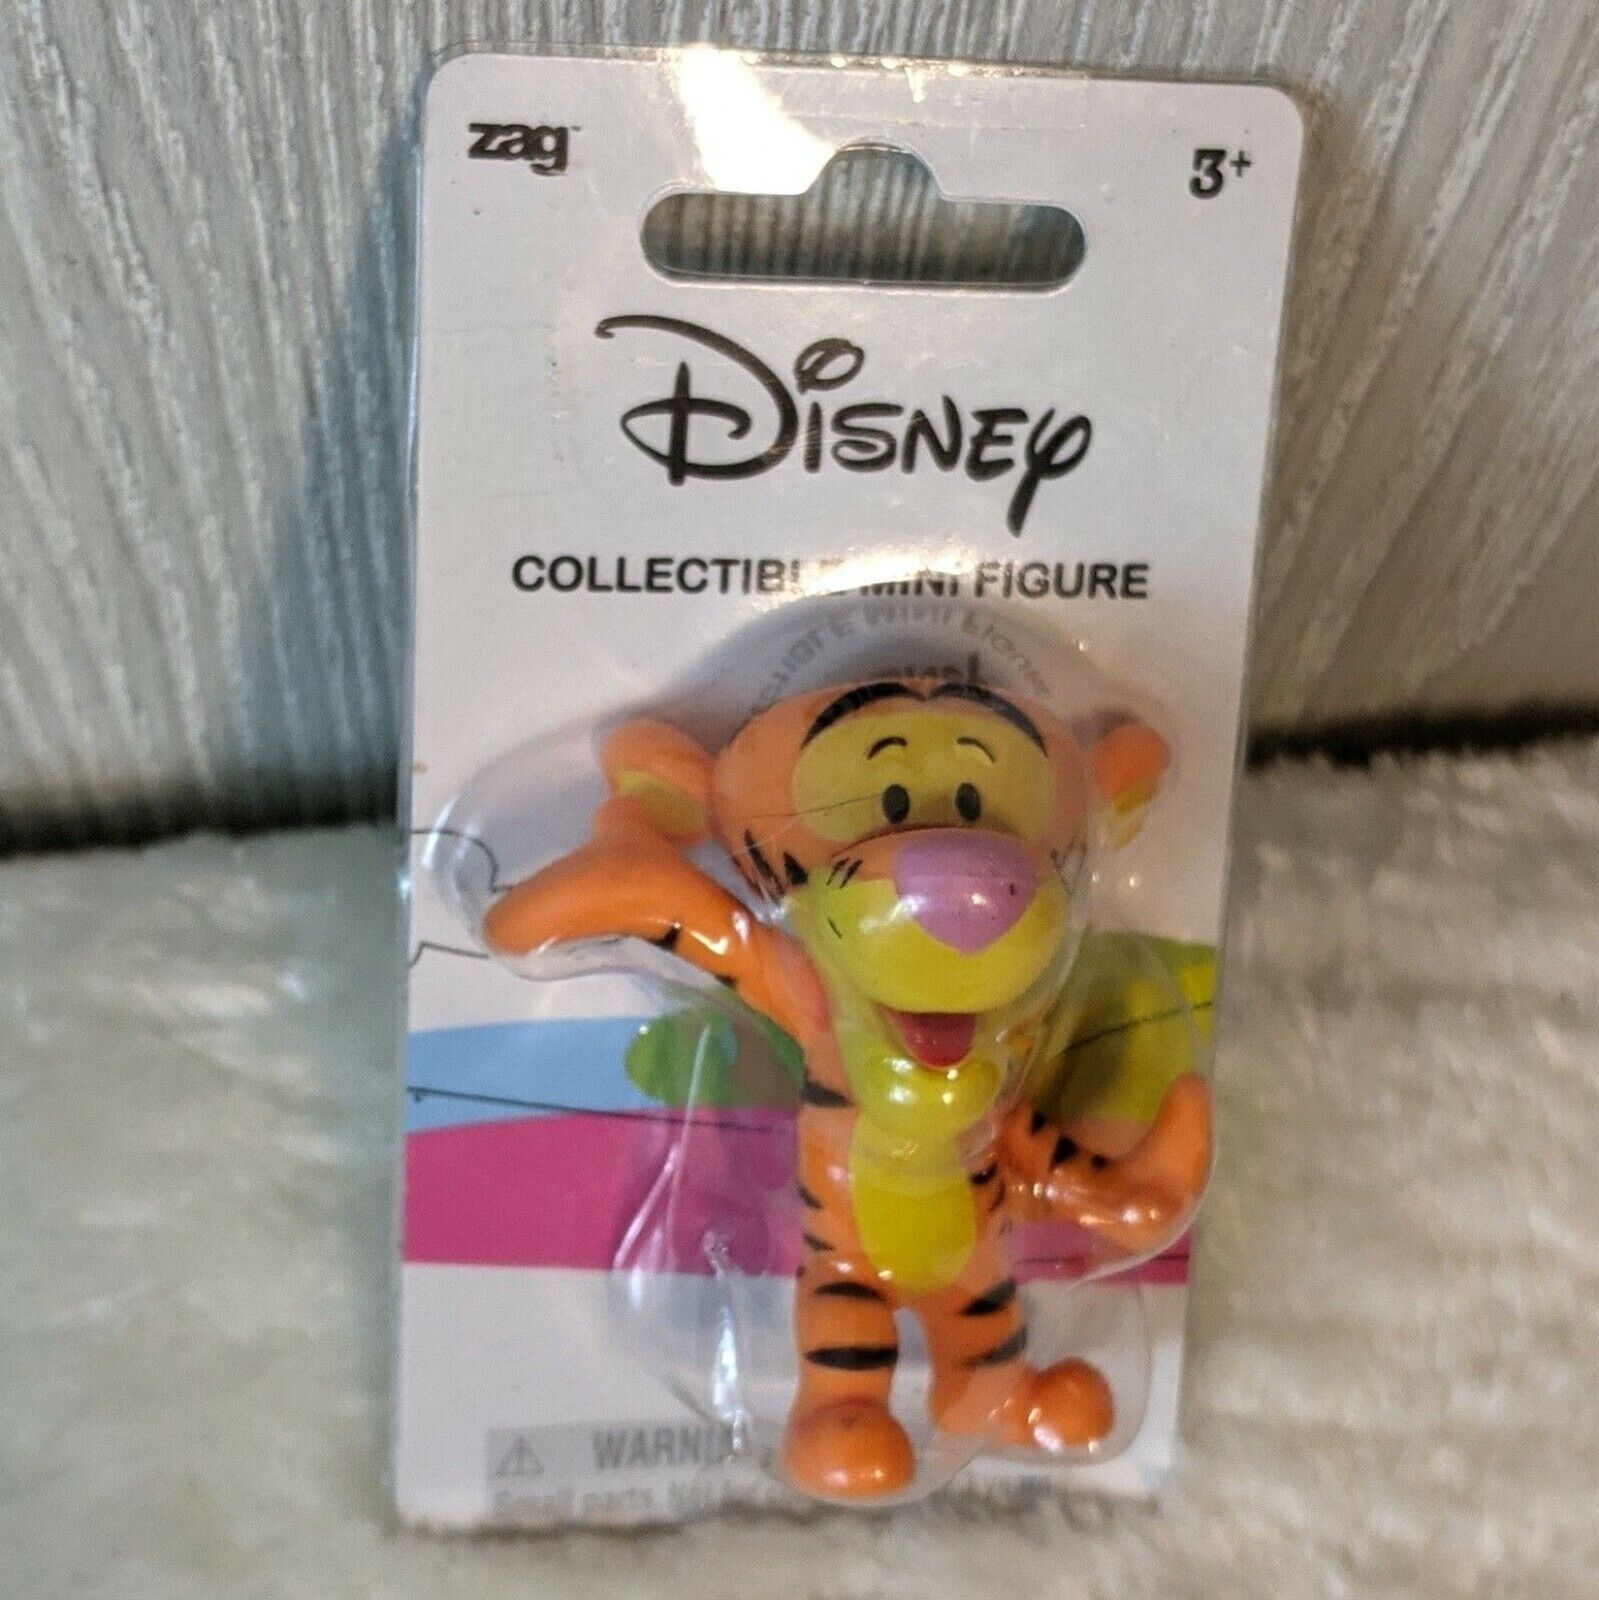 Disney Collectible Mini Figures Tigger NWT New Zag